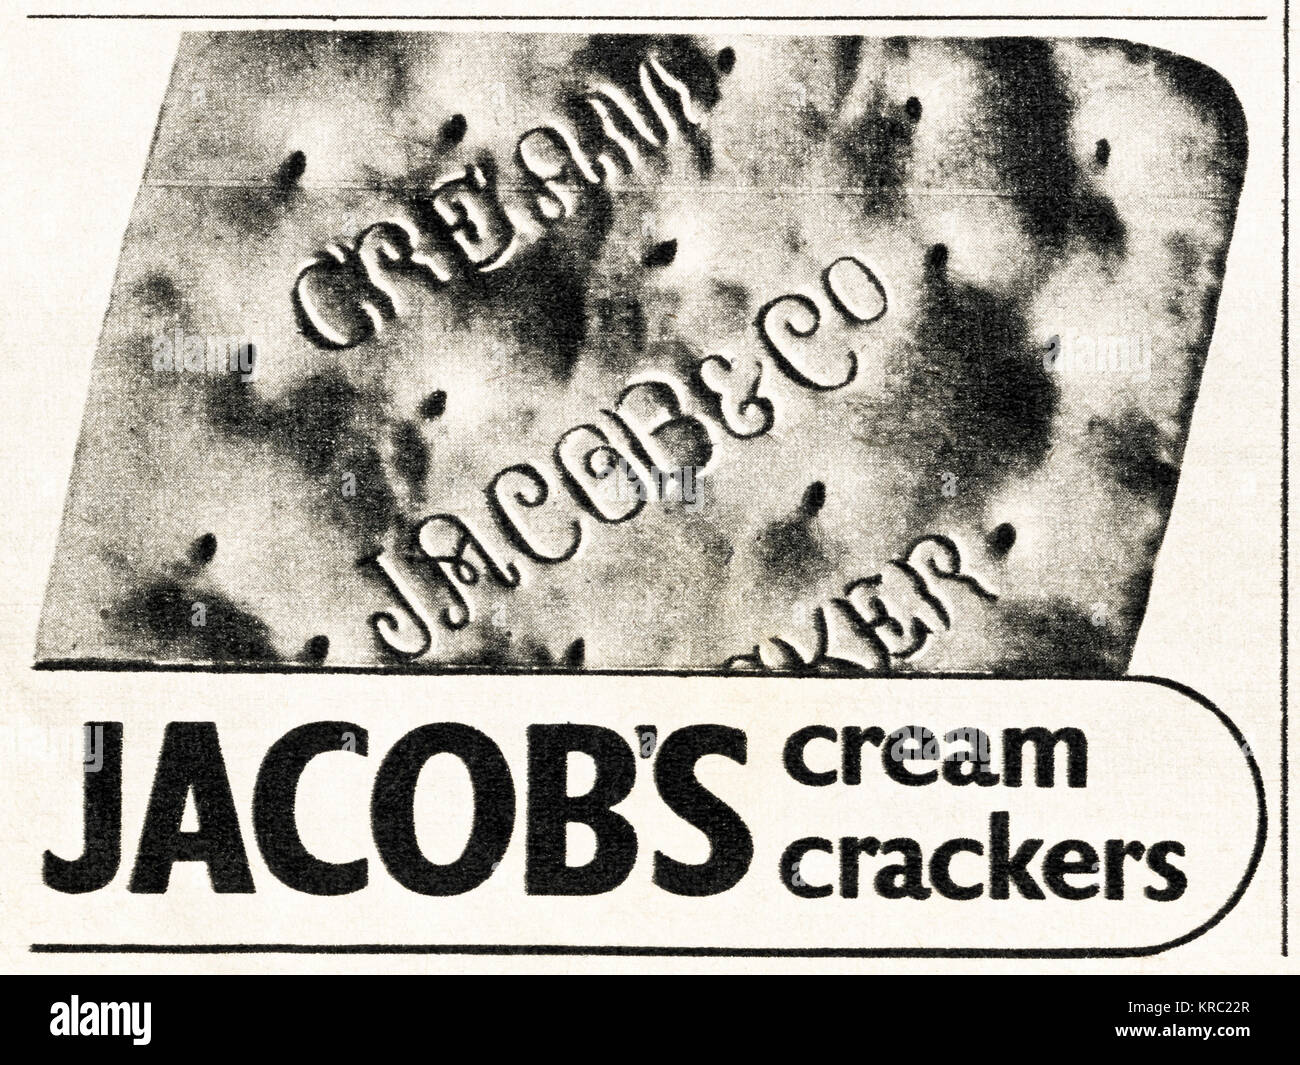 1940s old vintage original advert advertising Jacob's cream crackers in magazine circa 1947 when supplies were still restricted under postwar rationing Stock Photo